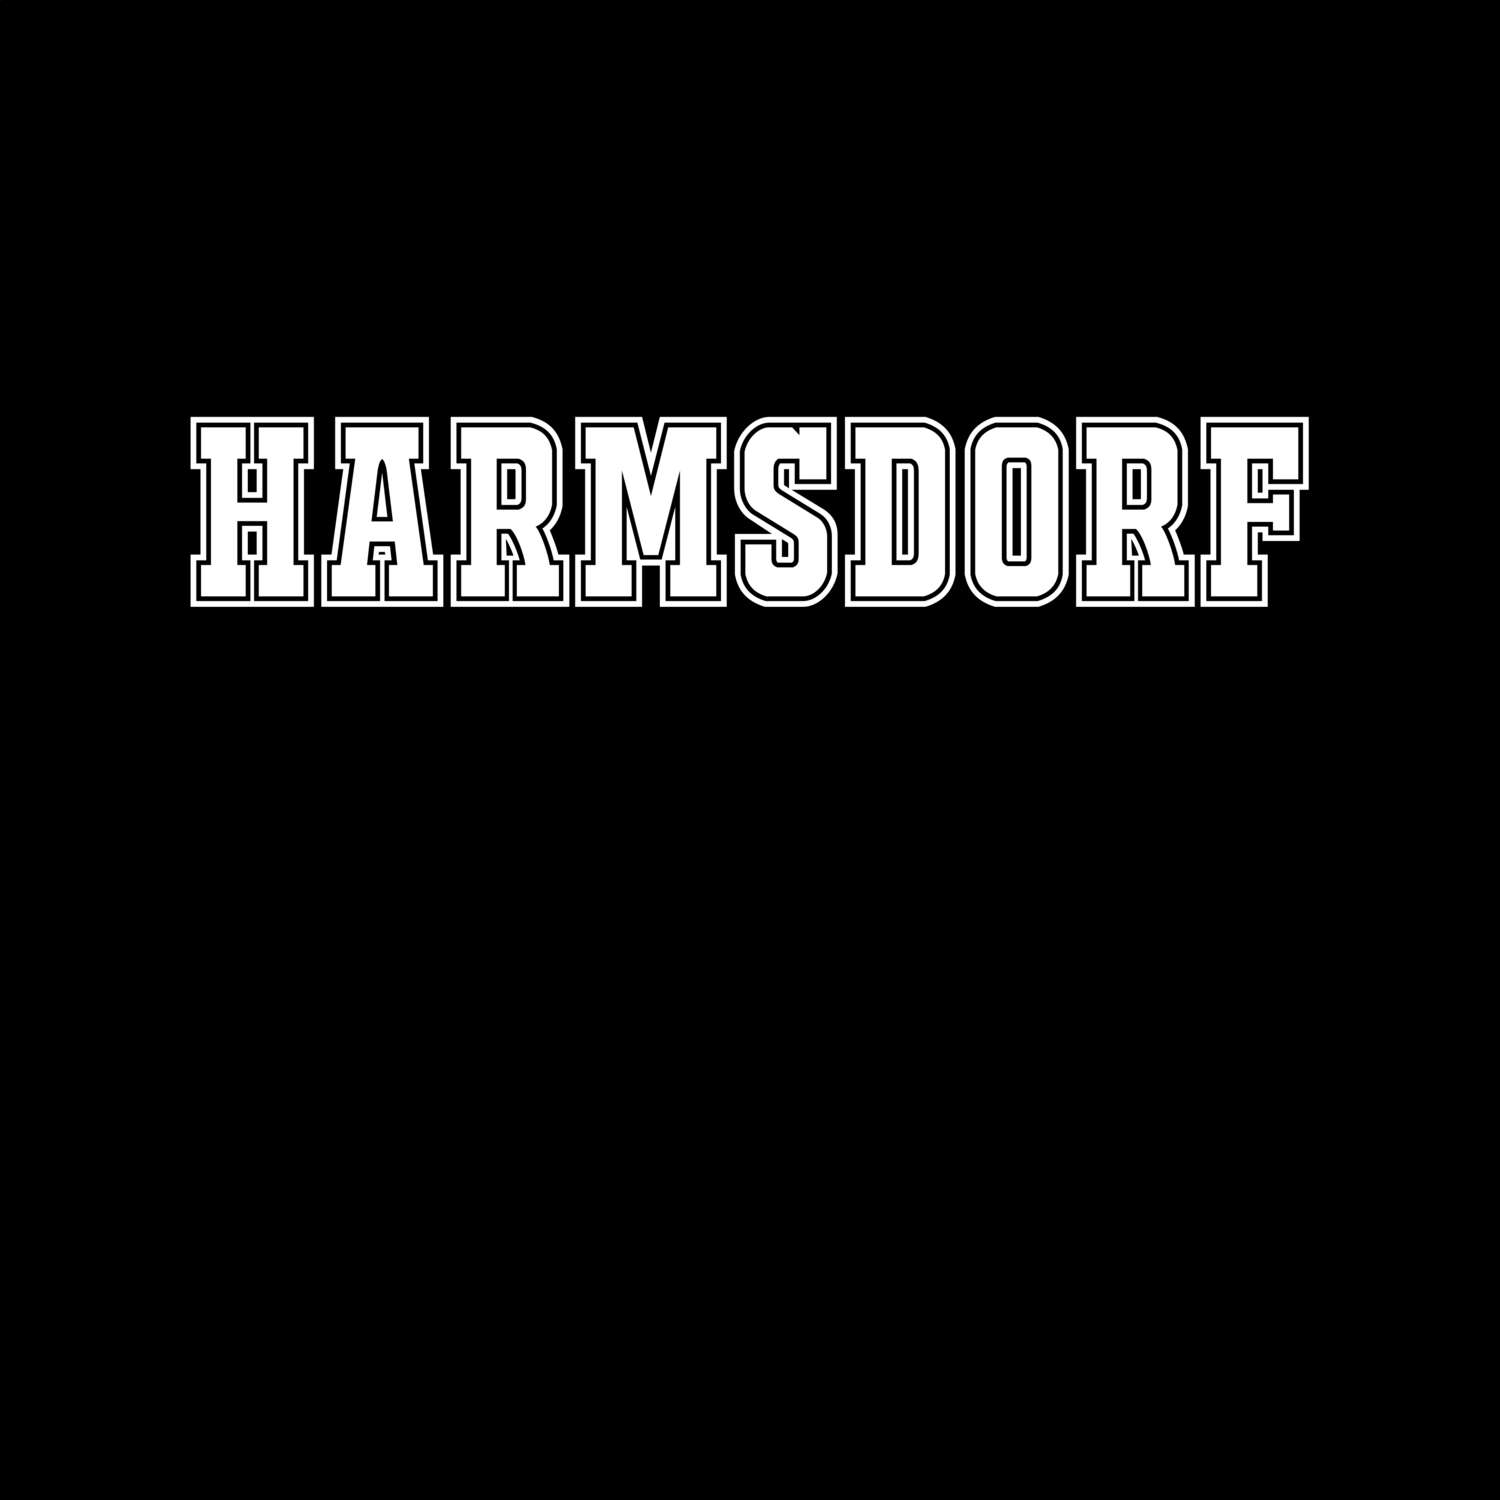 Harmsdorf T-Shirt »Classic«